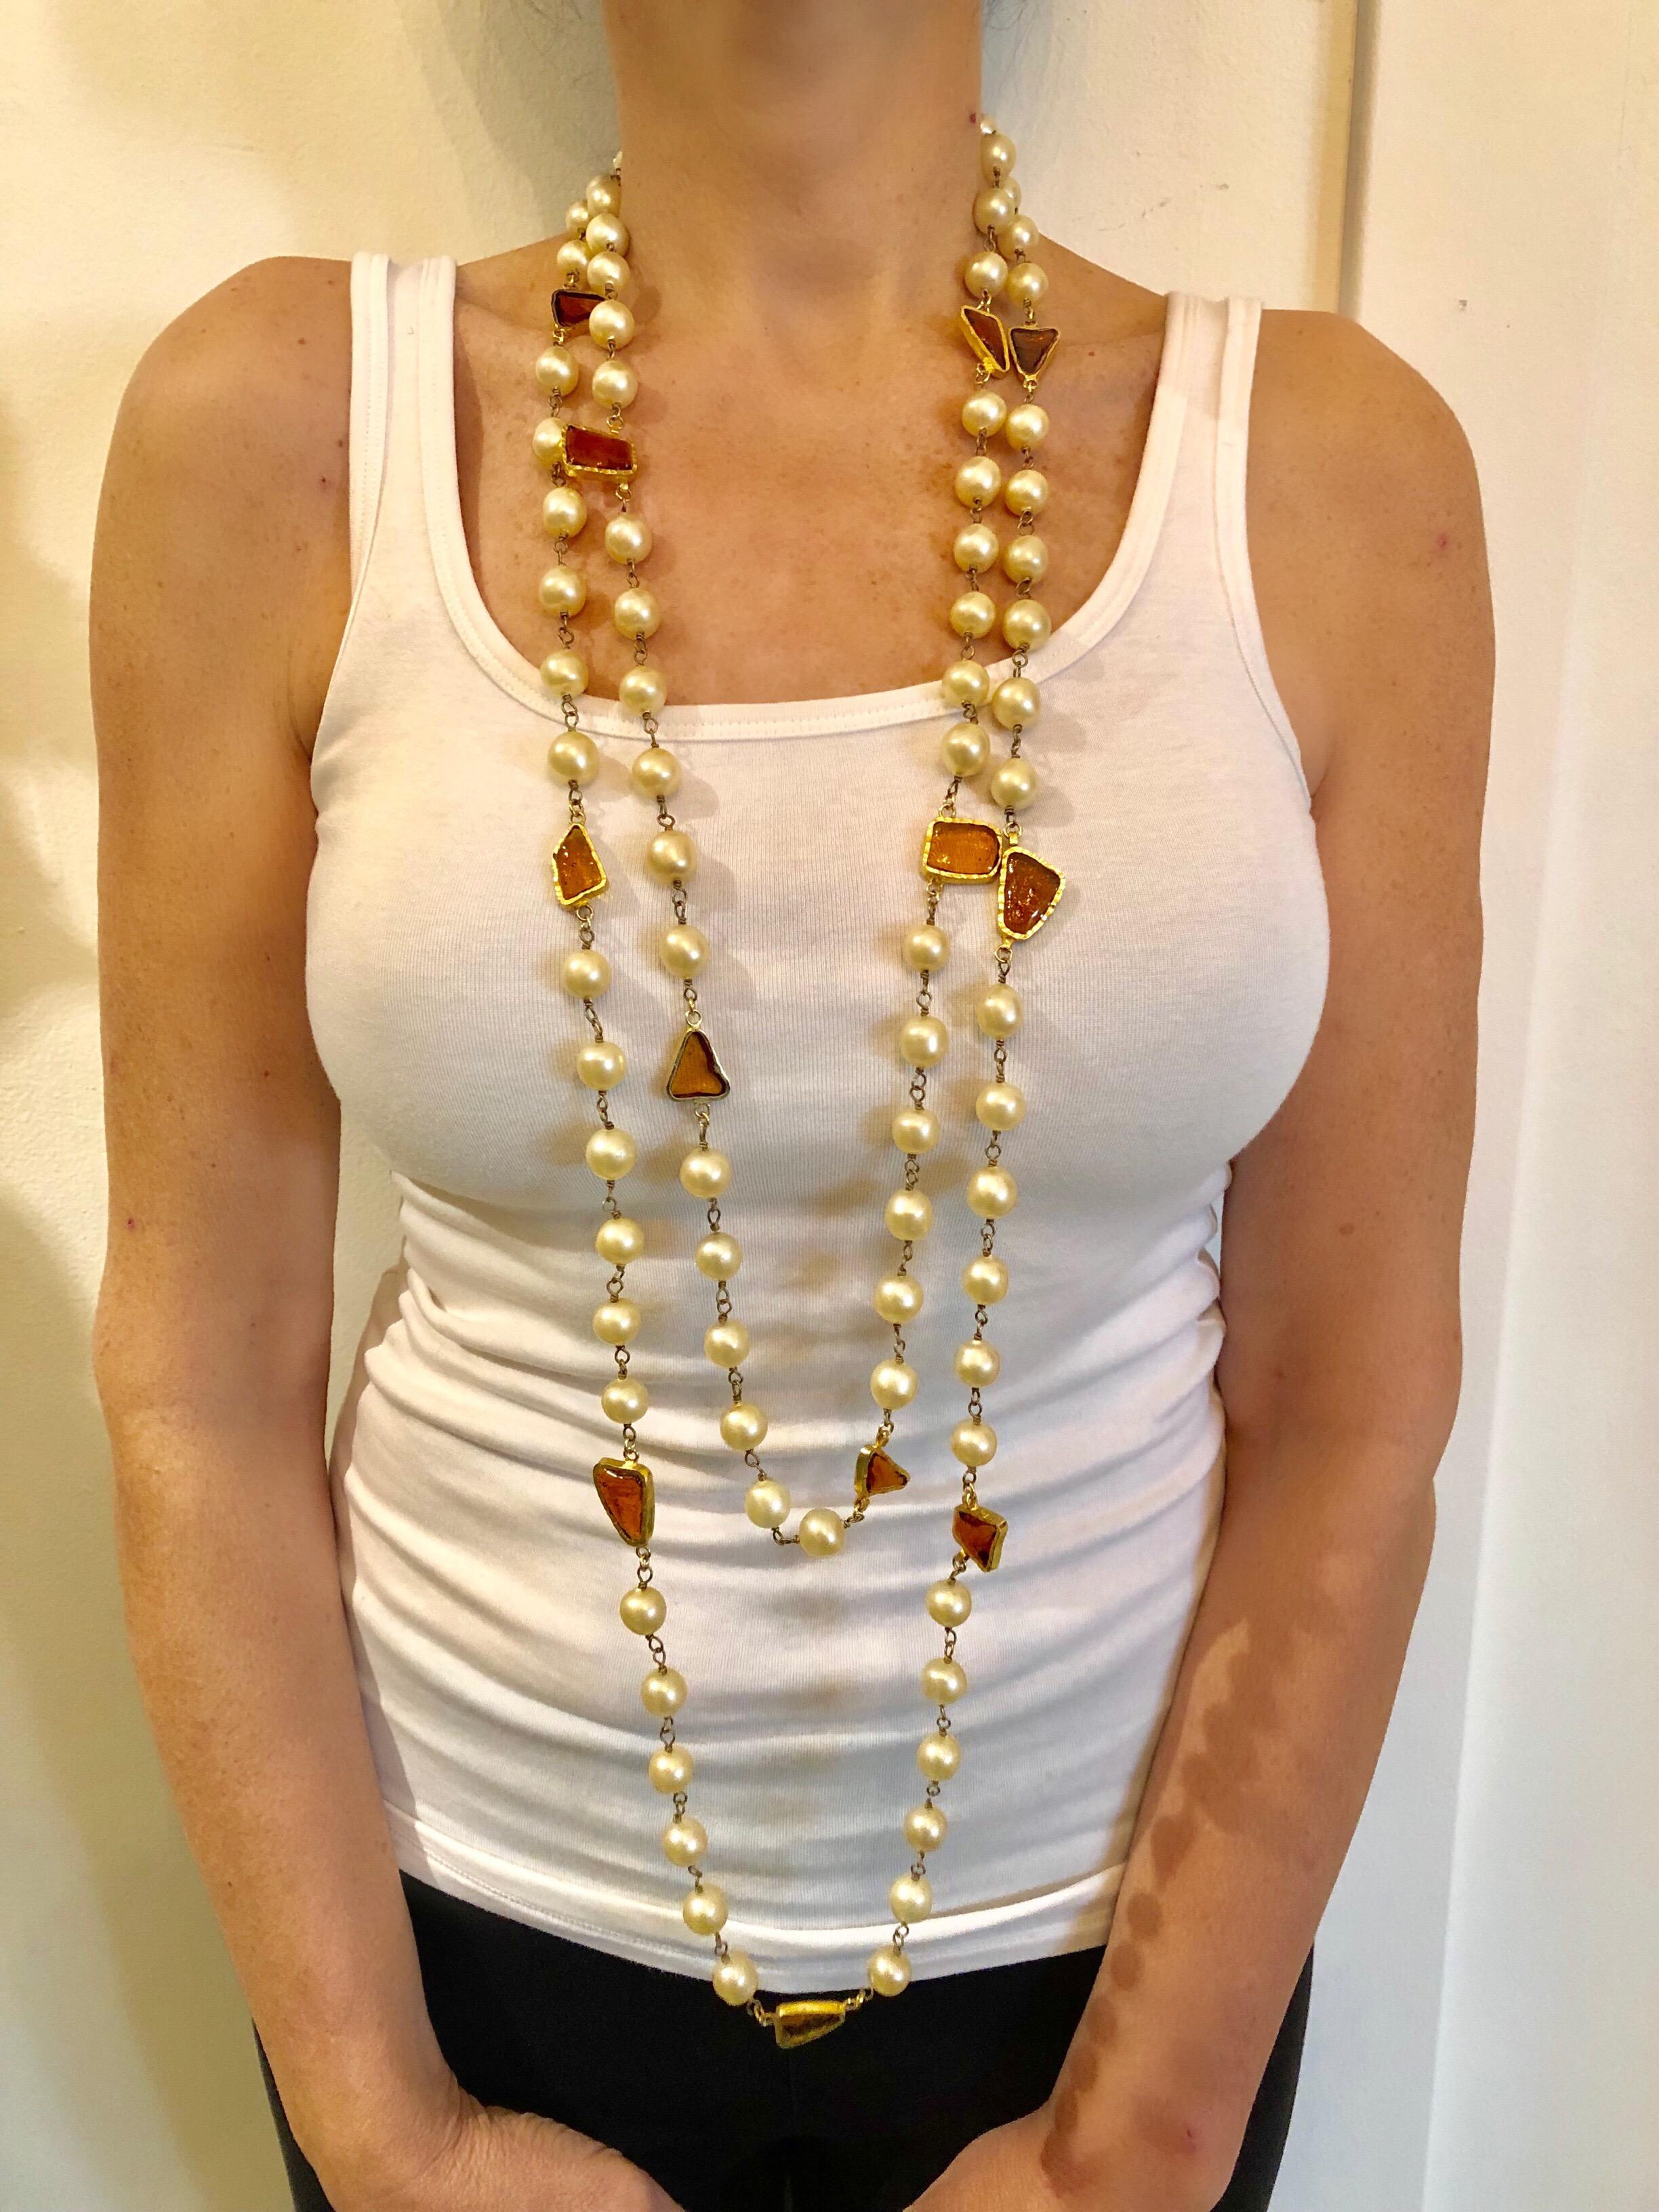 coco chanel necklace pearl